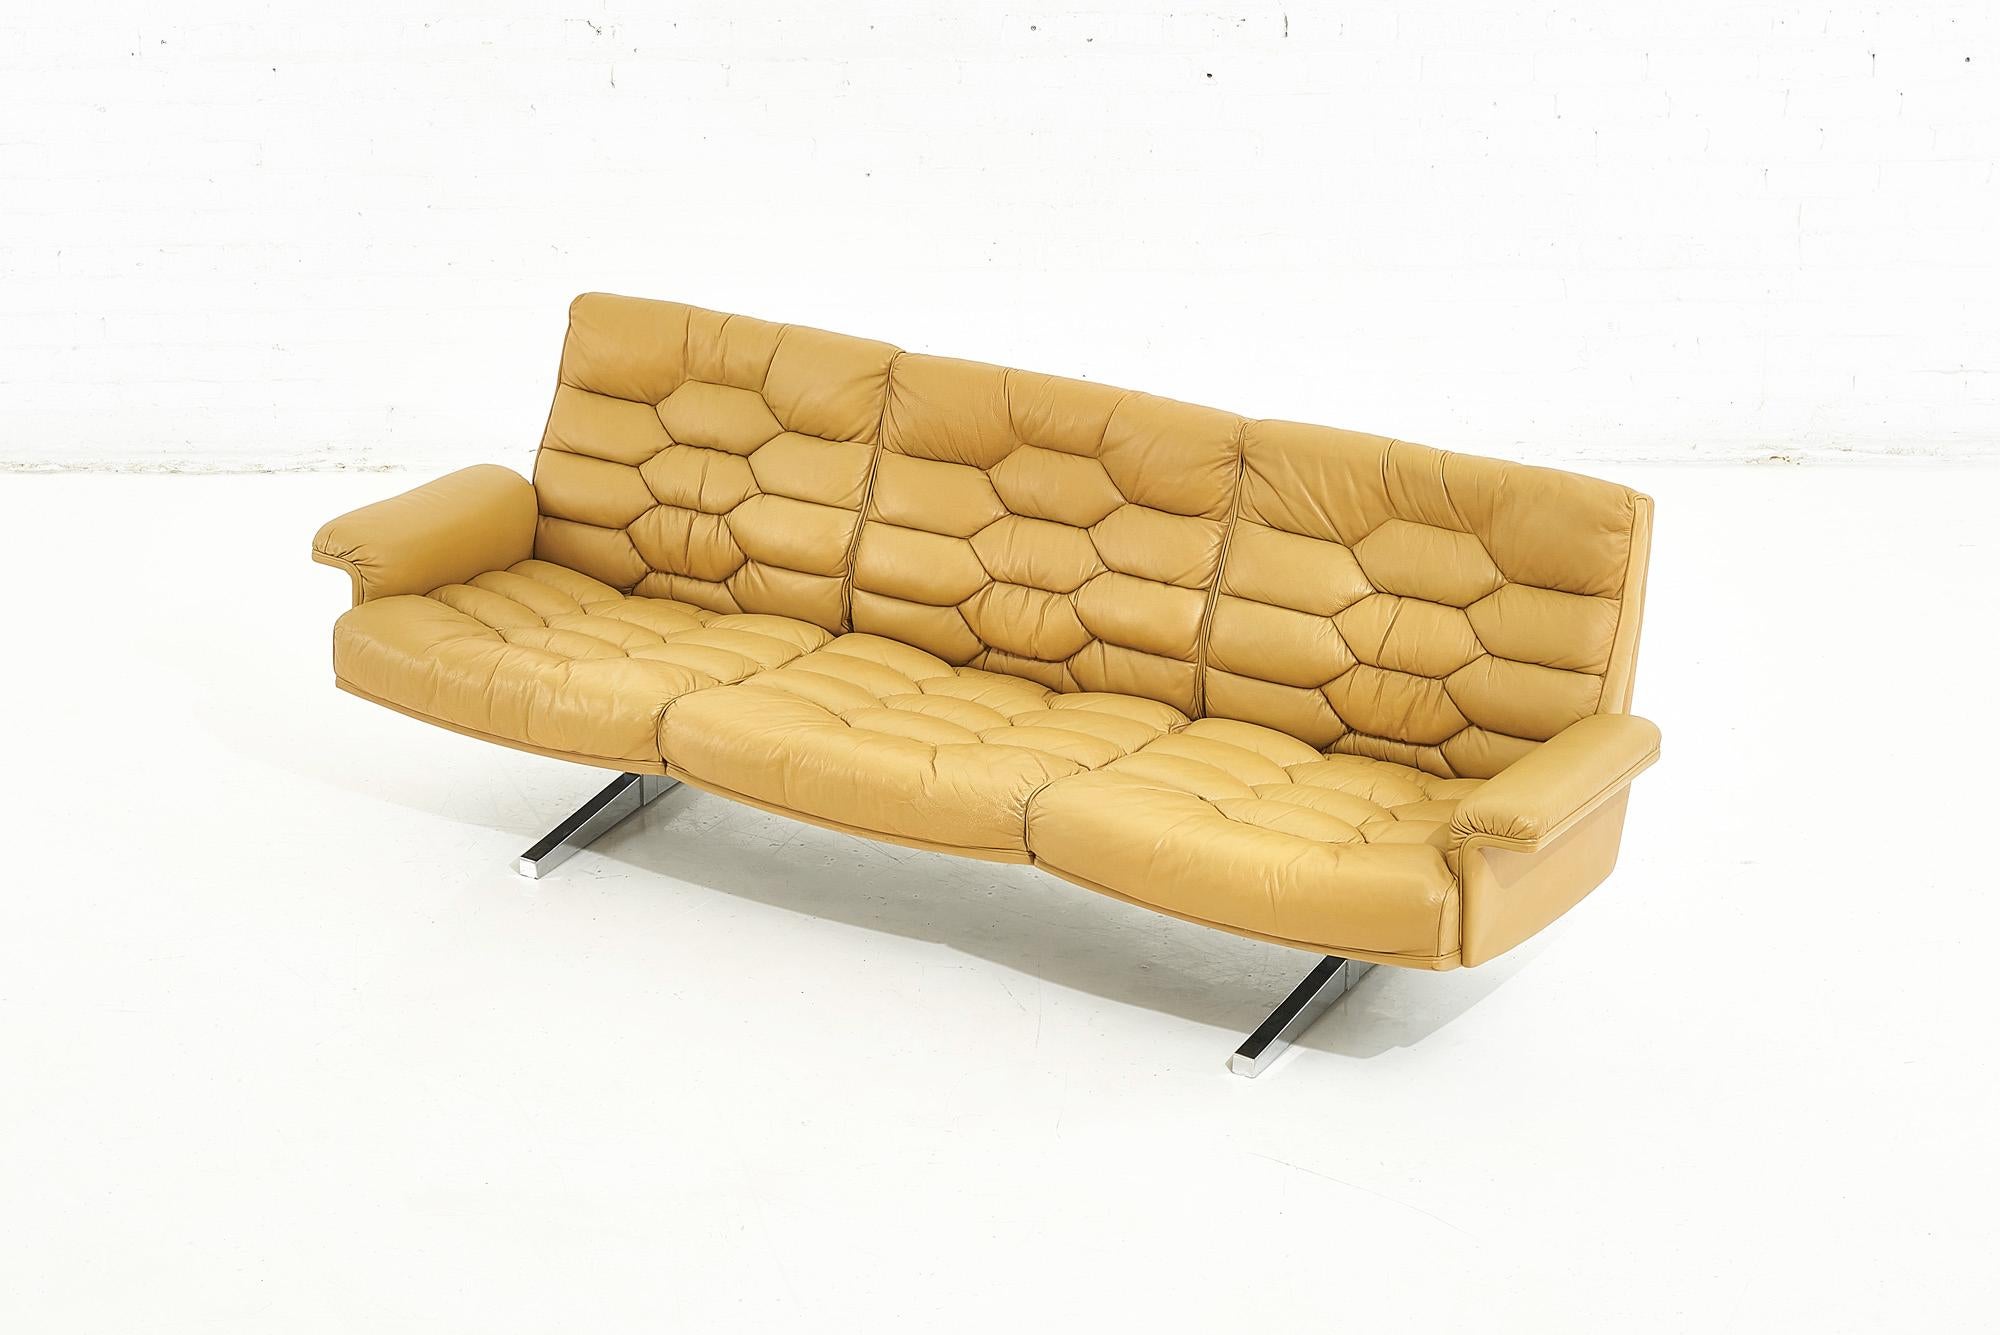 De Sede leather DS-P sofa by Robert Haussmann, Switzerland, 1970.